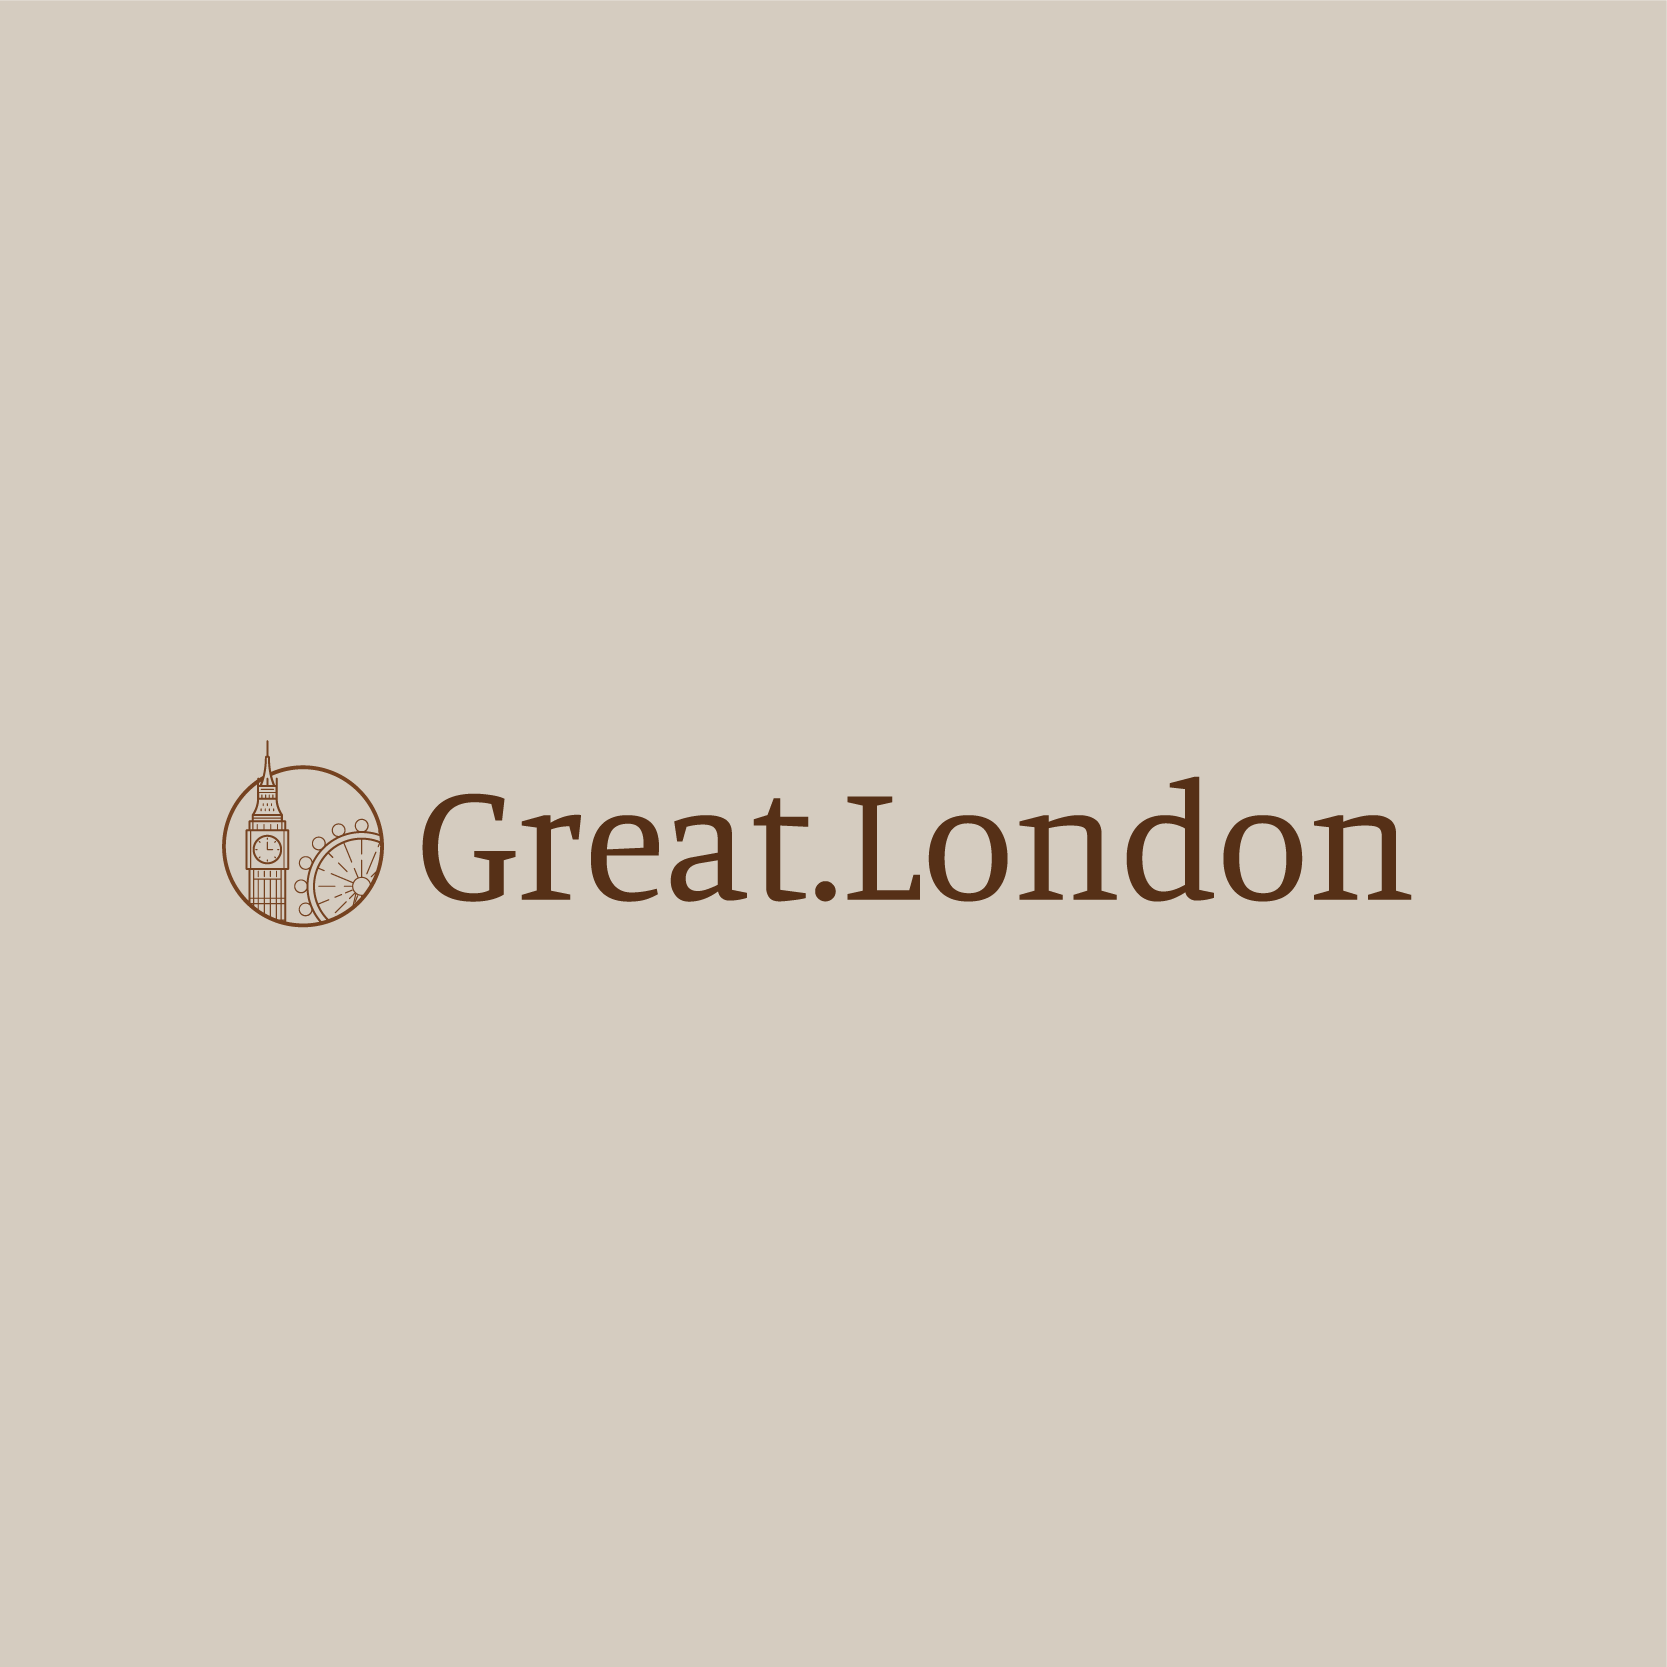 great-london-logo-png.162284